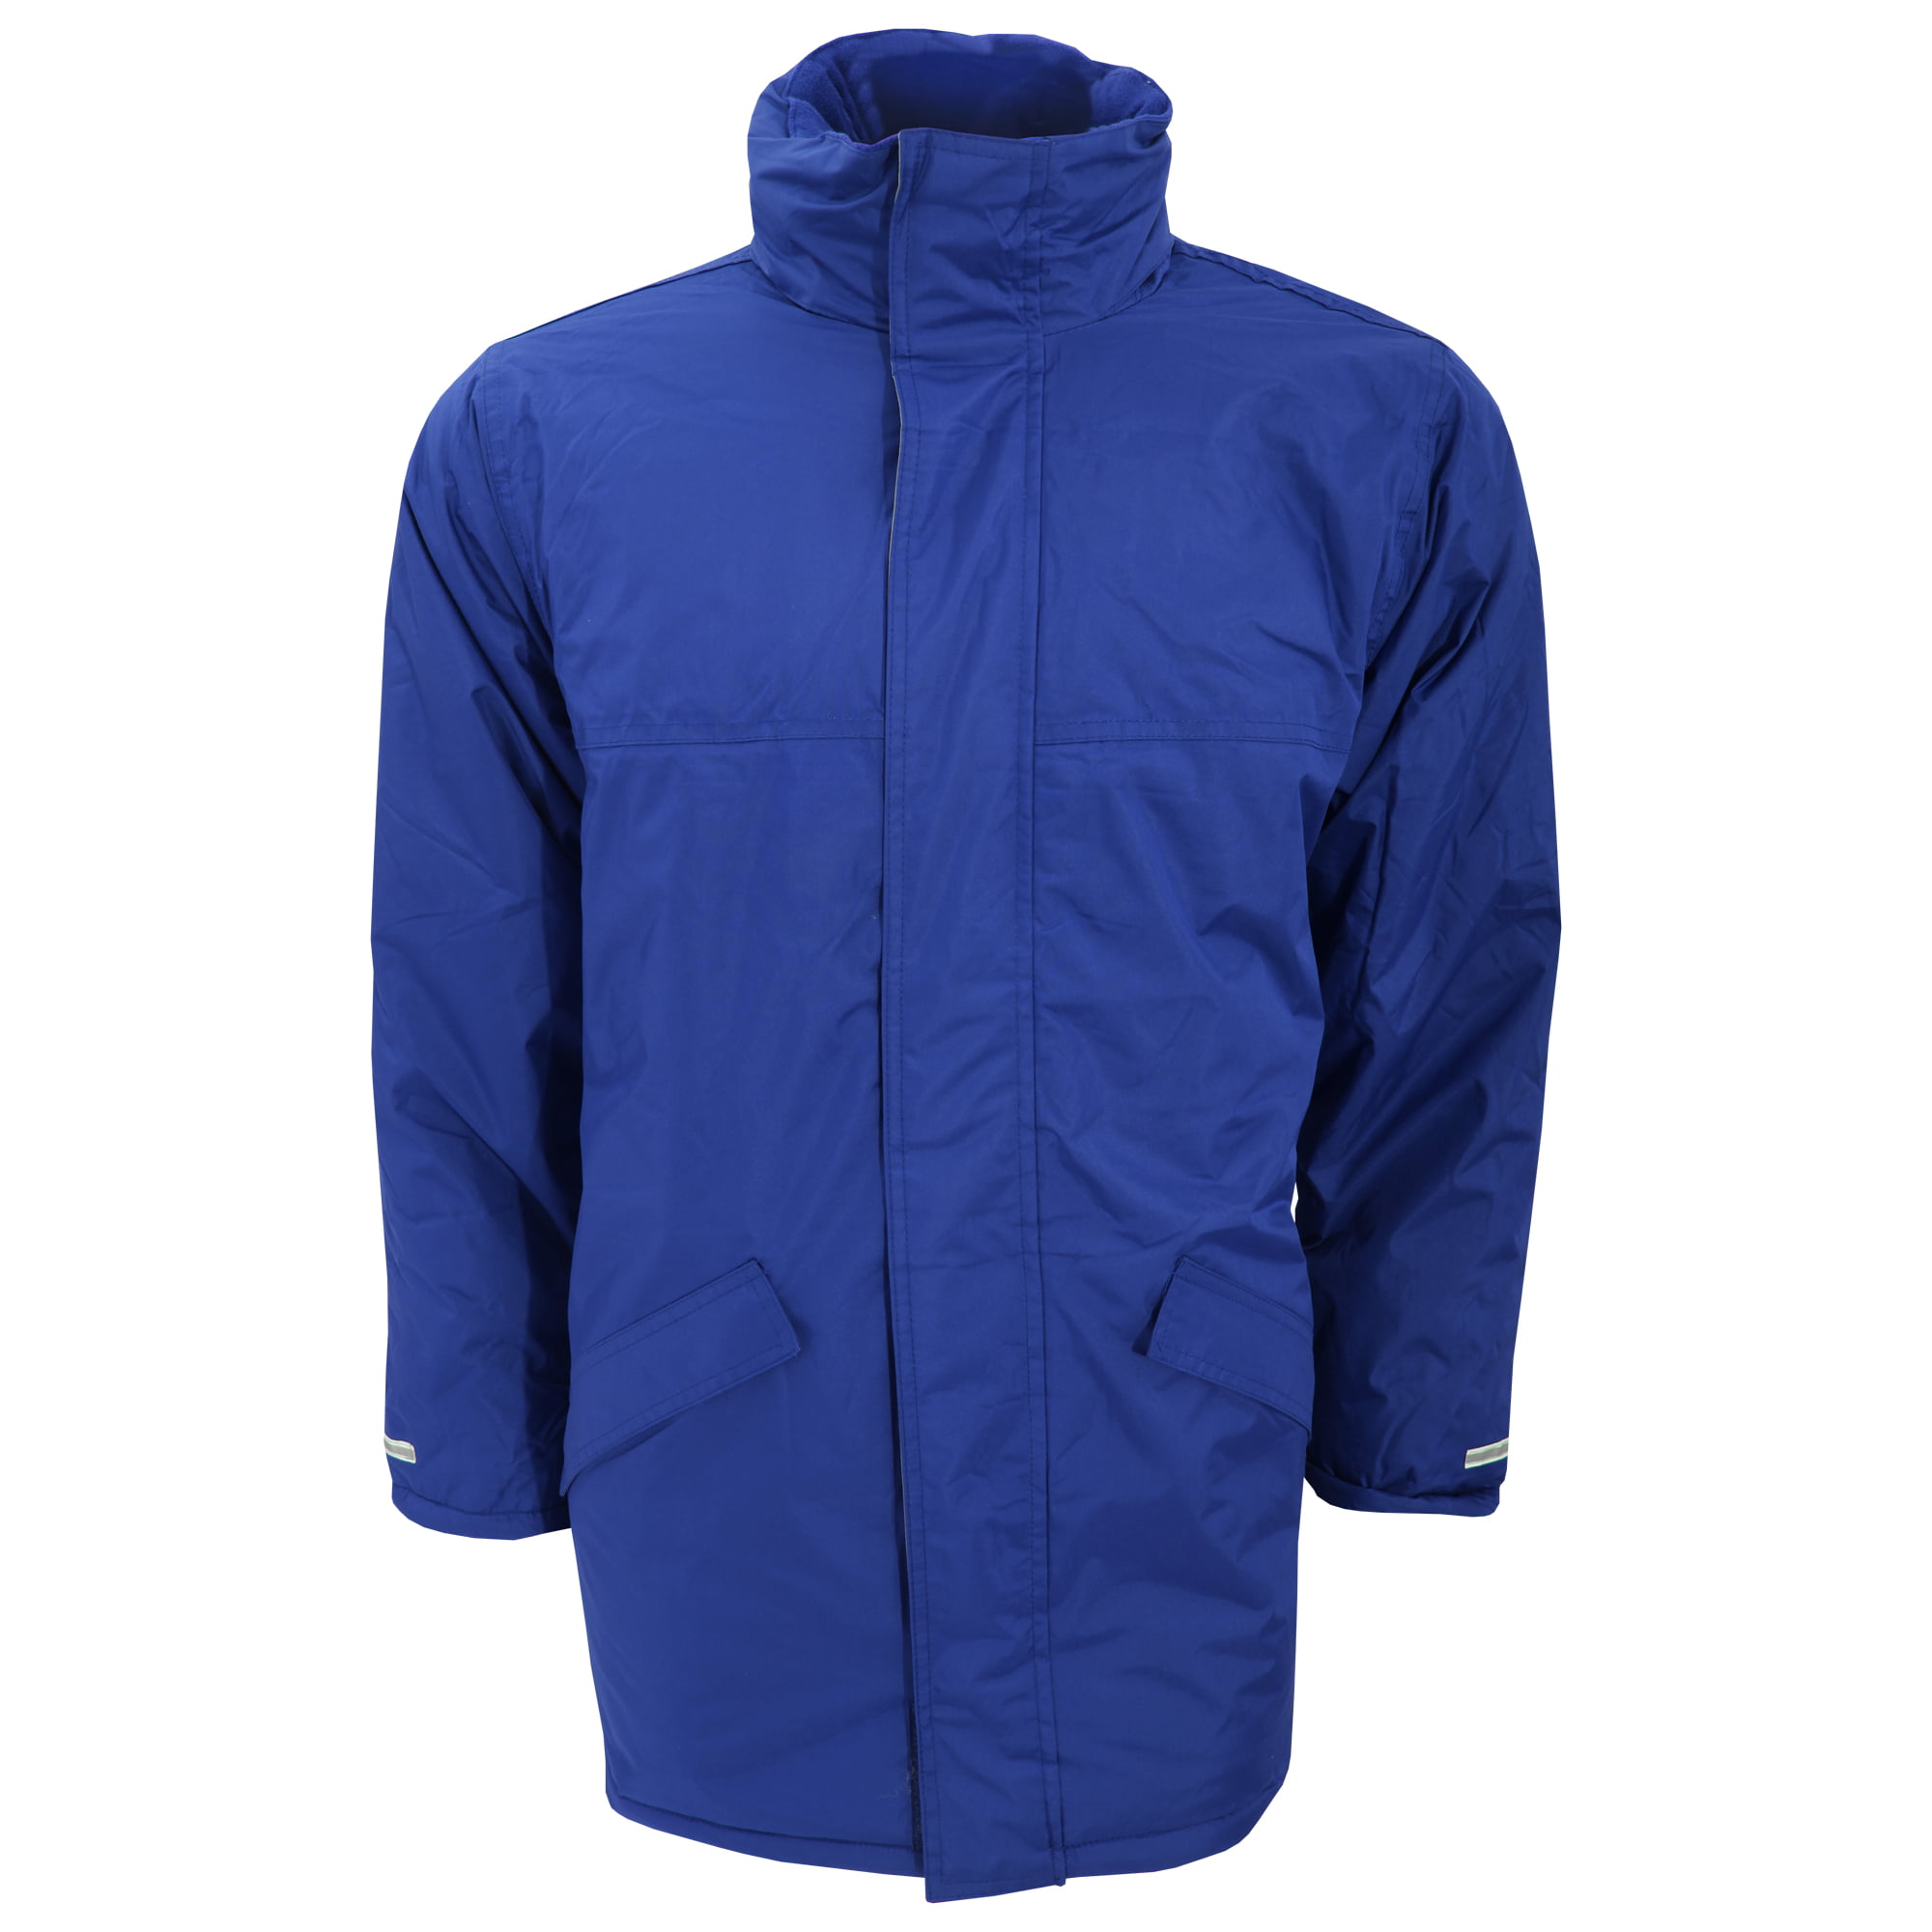 Size 5XL RT100 NAVY BLUE Mens Polyester Work Waterproof Windproof Jacket Coat 